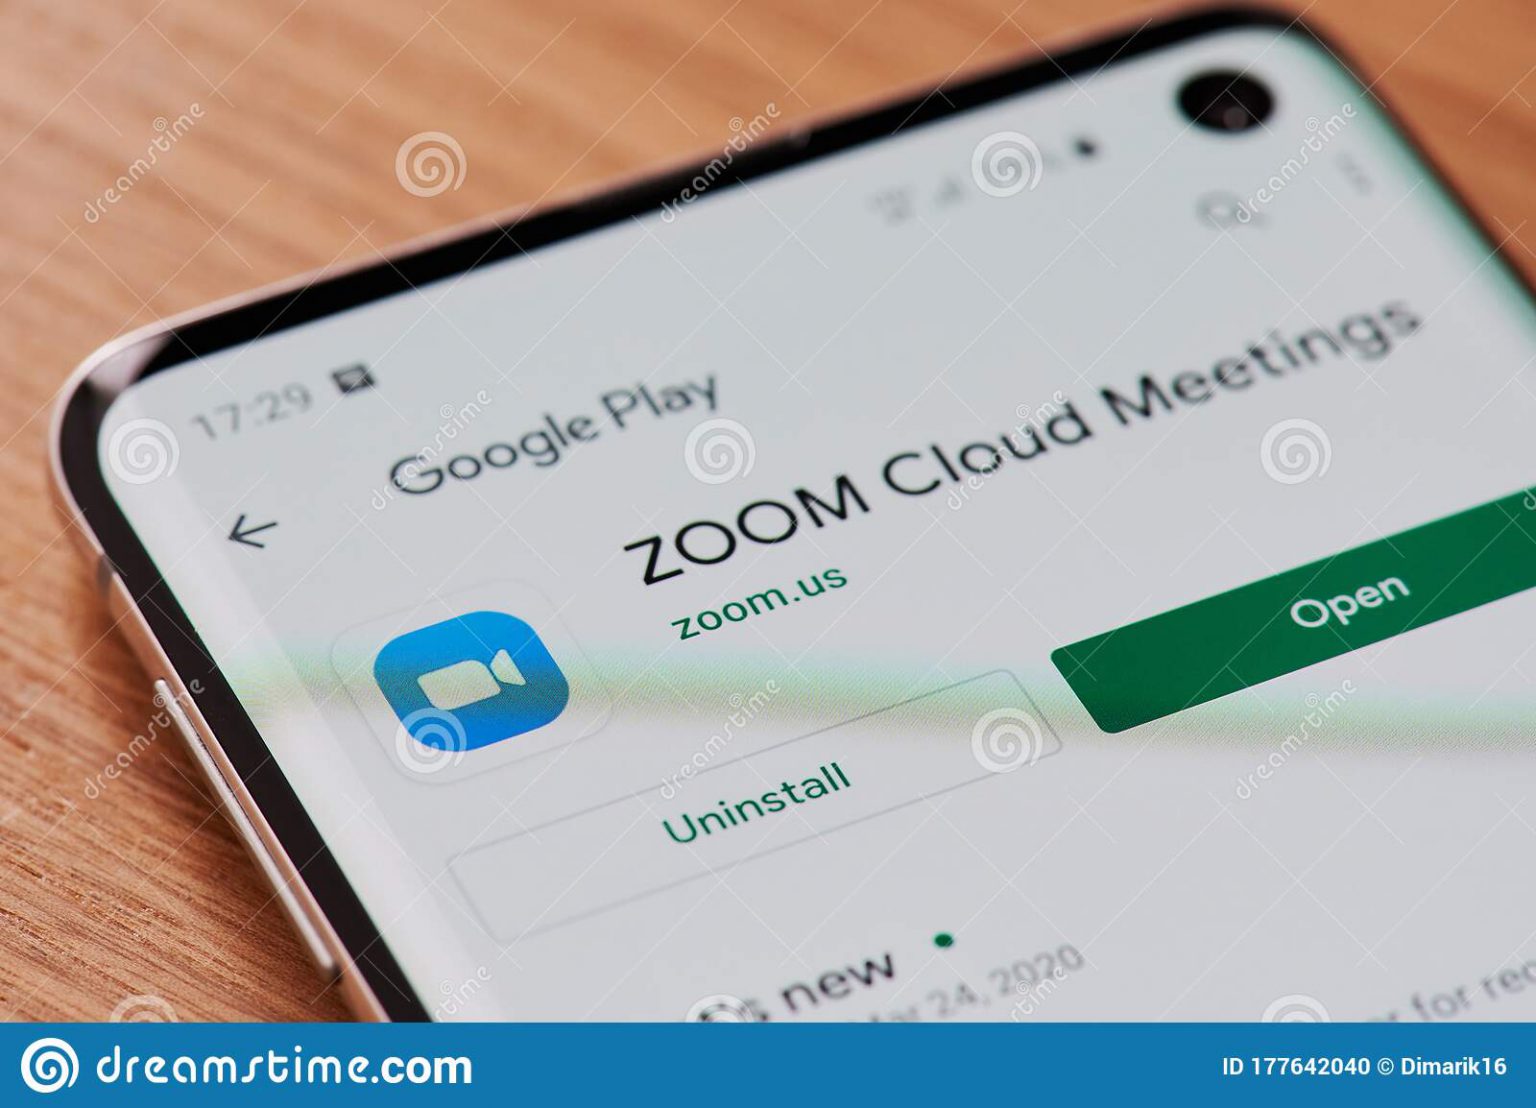 cloud meeting app download